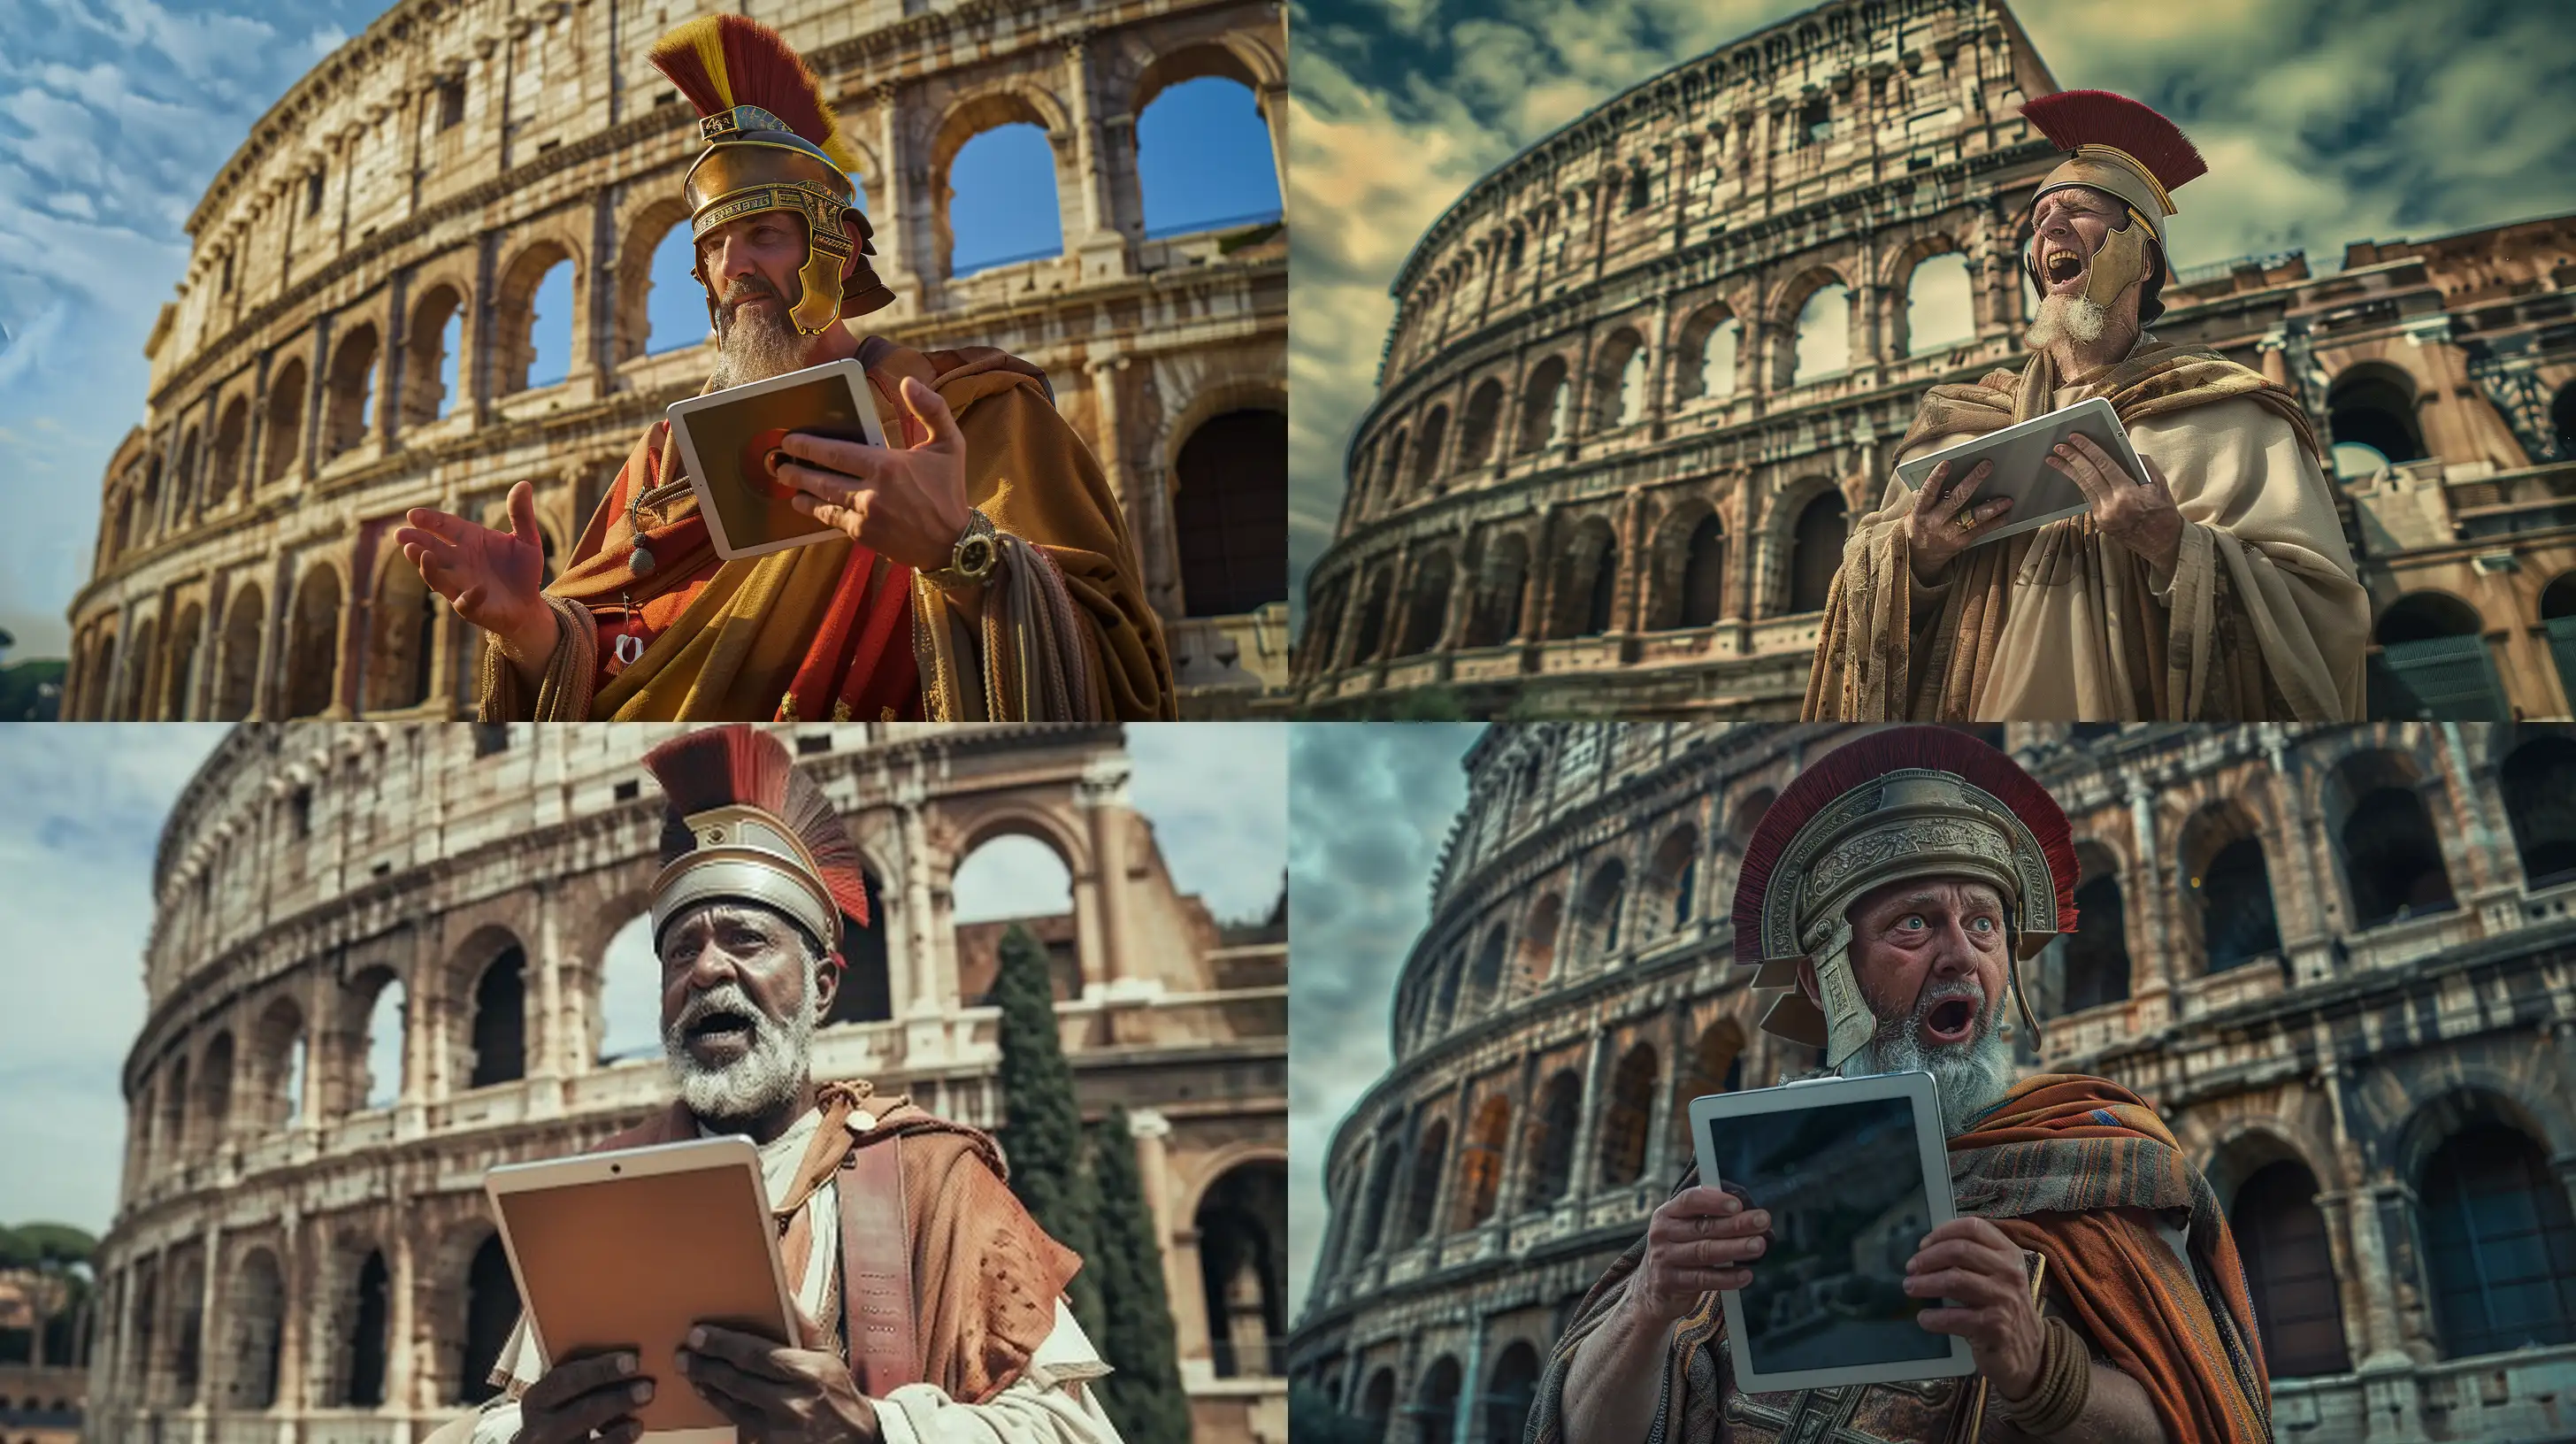 Euphoric-Roman-Centurion-with-iPad-at-the-Colosseum